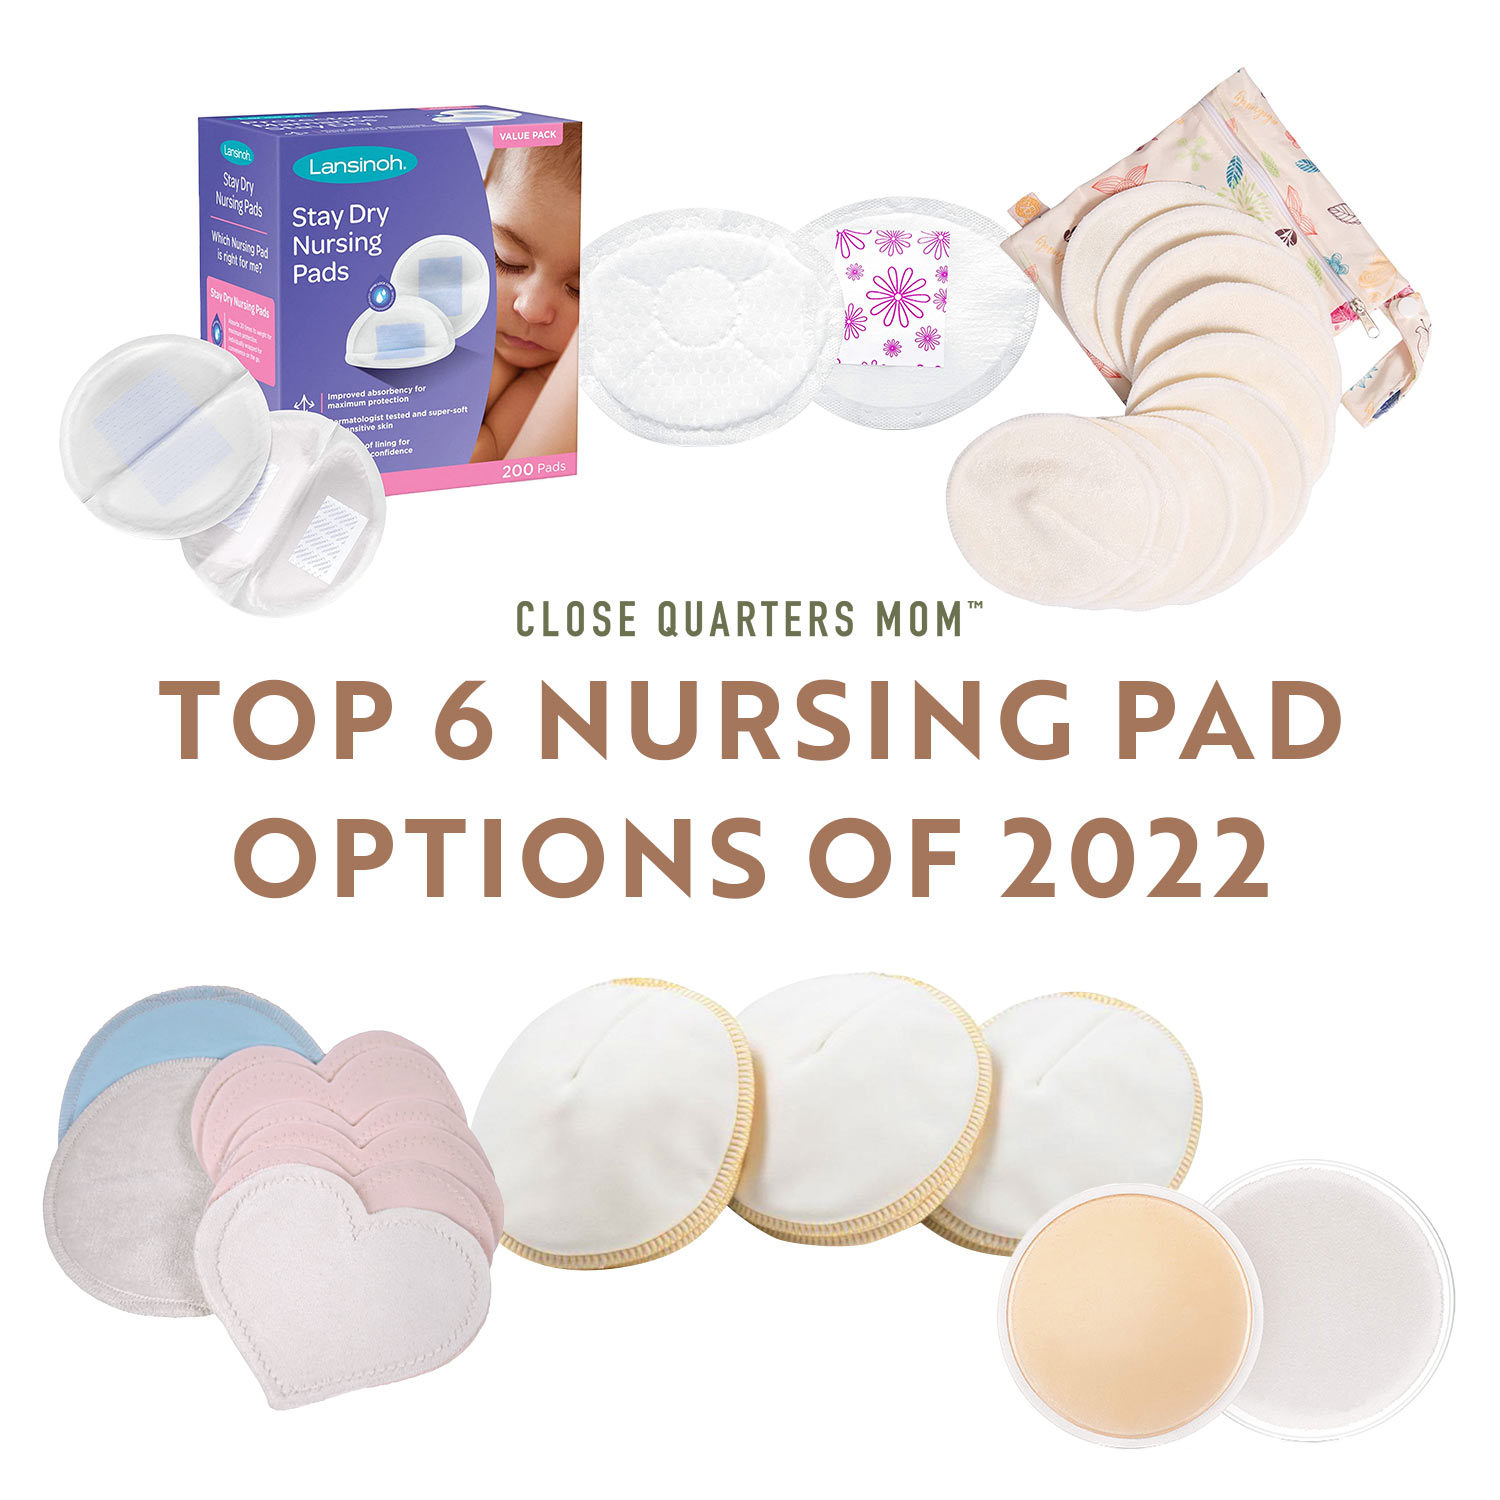 Top 6 Nursing Pad Options Of 2022